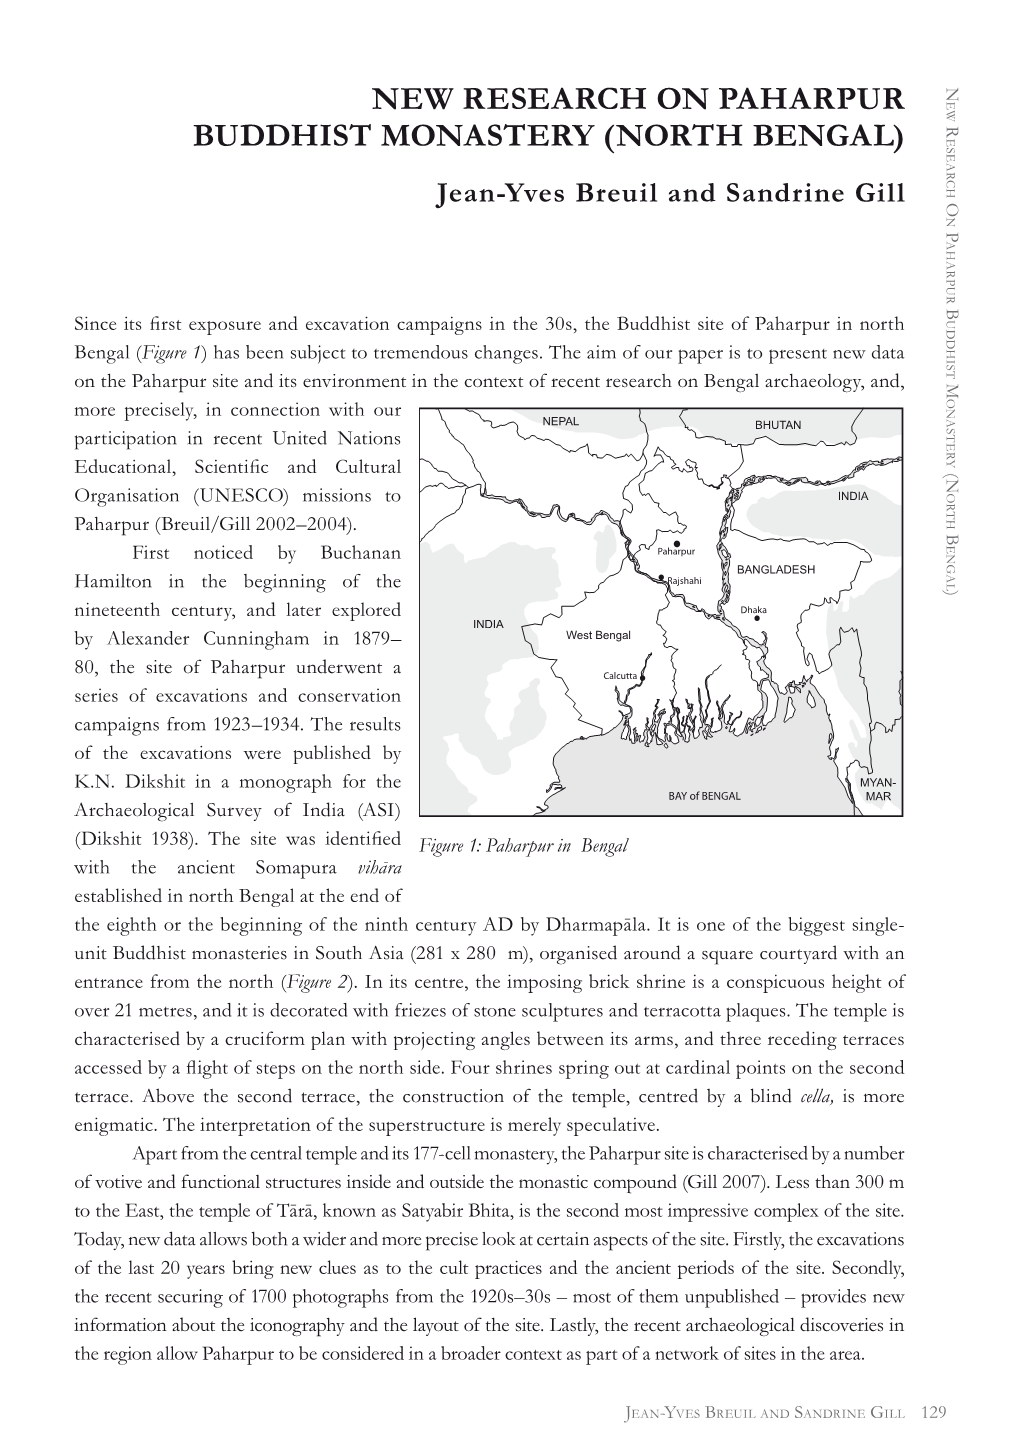 New Research on Paharpur Buddhist Monastery